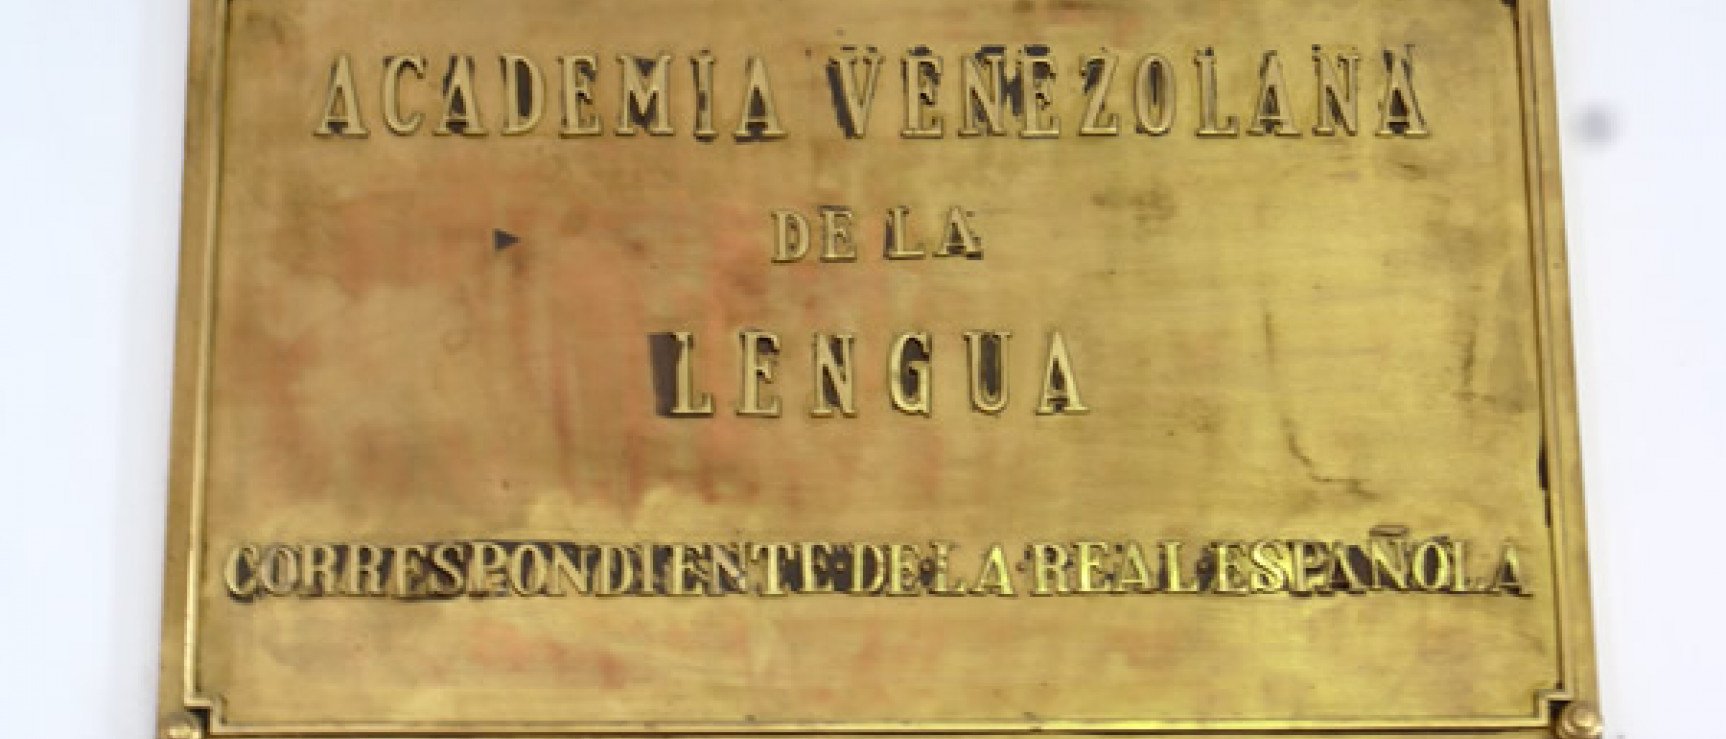 Sede de la Academia Venezolana de la Lengua